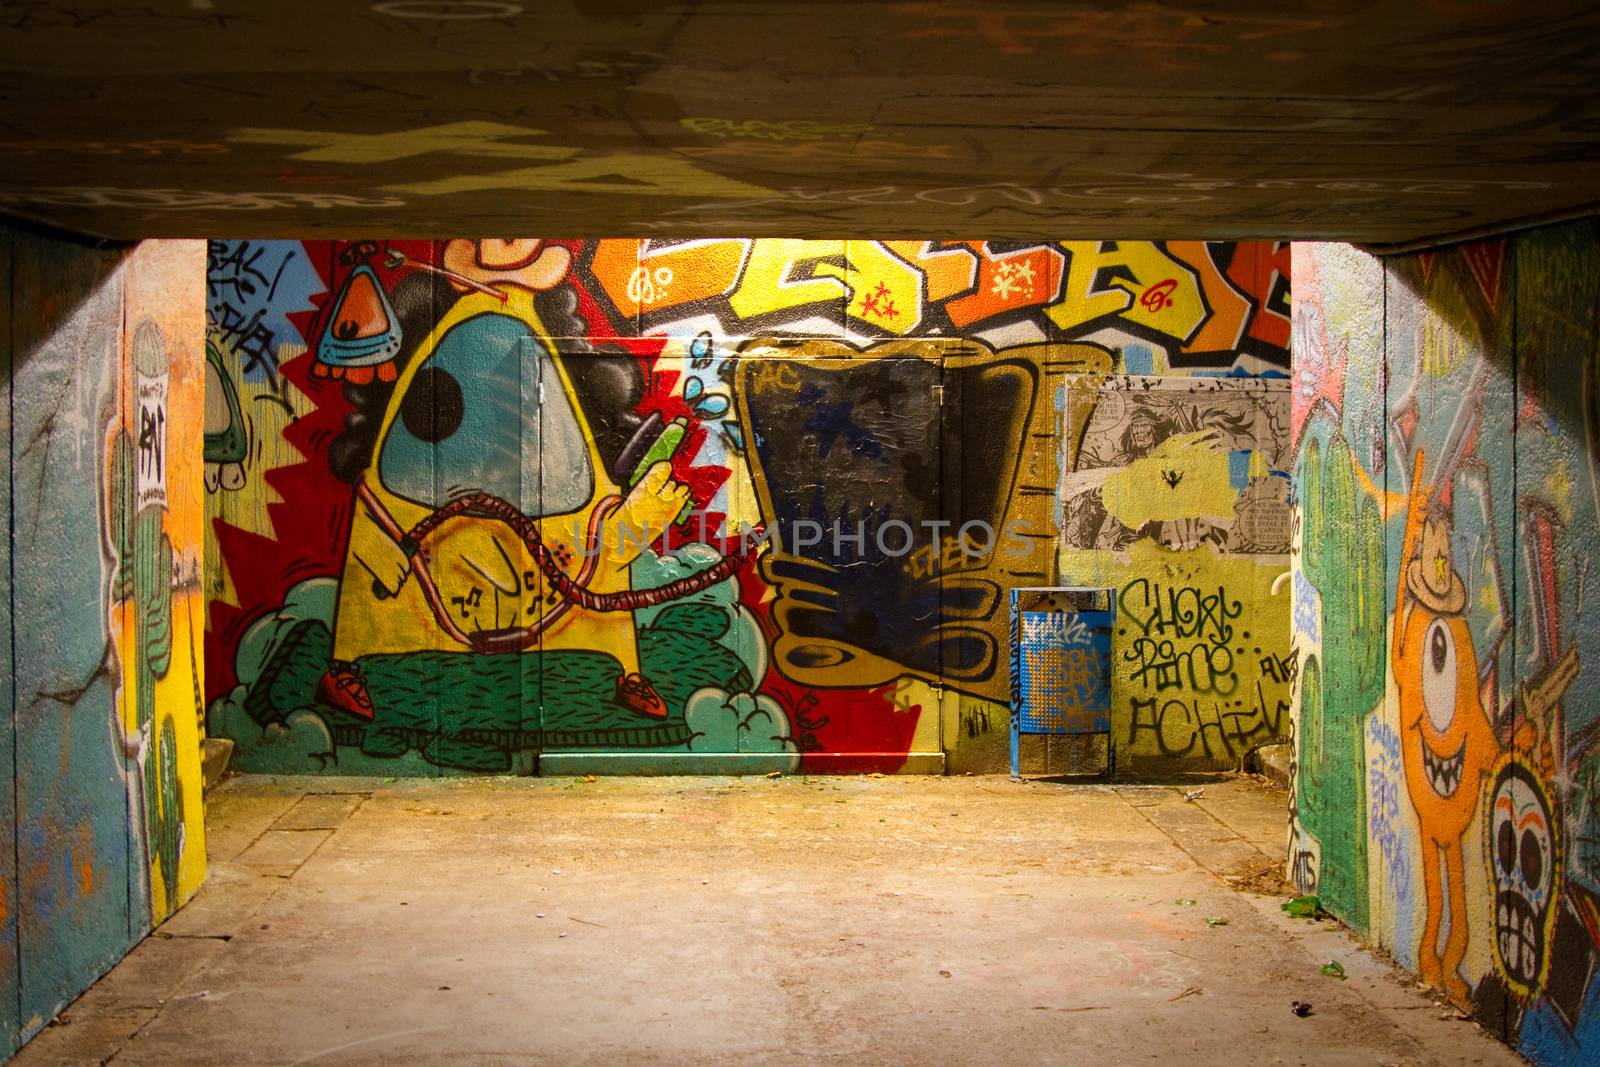 Graffiti in an underground footpath